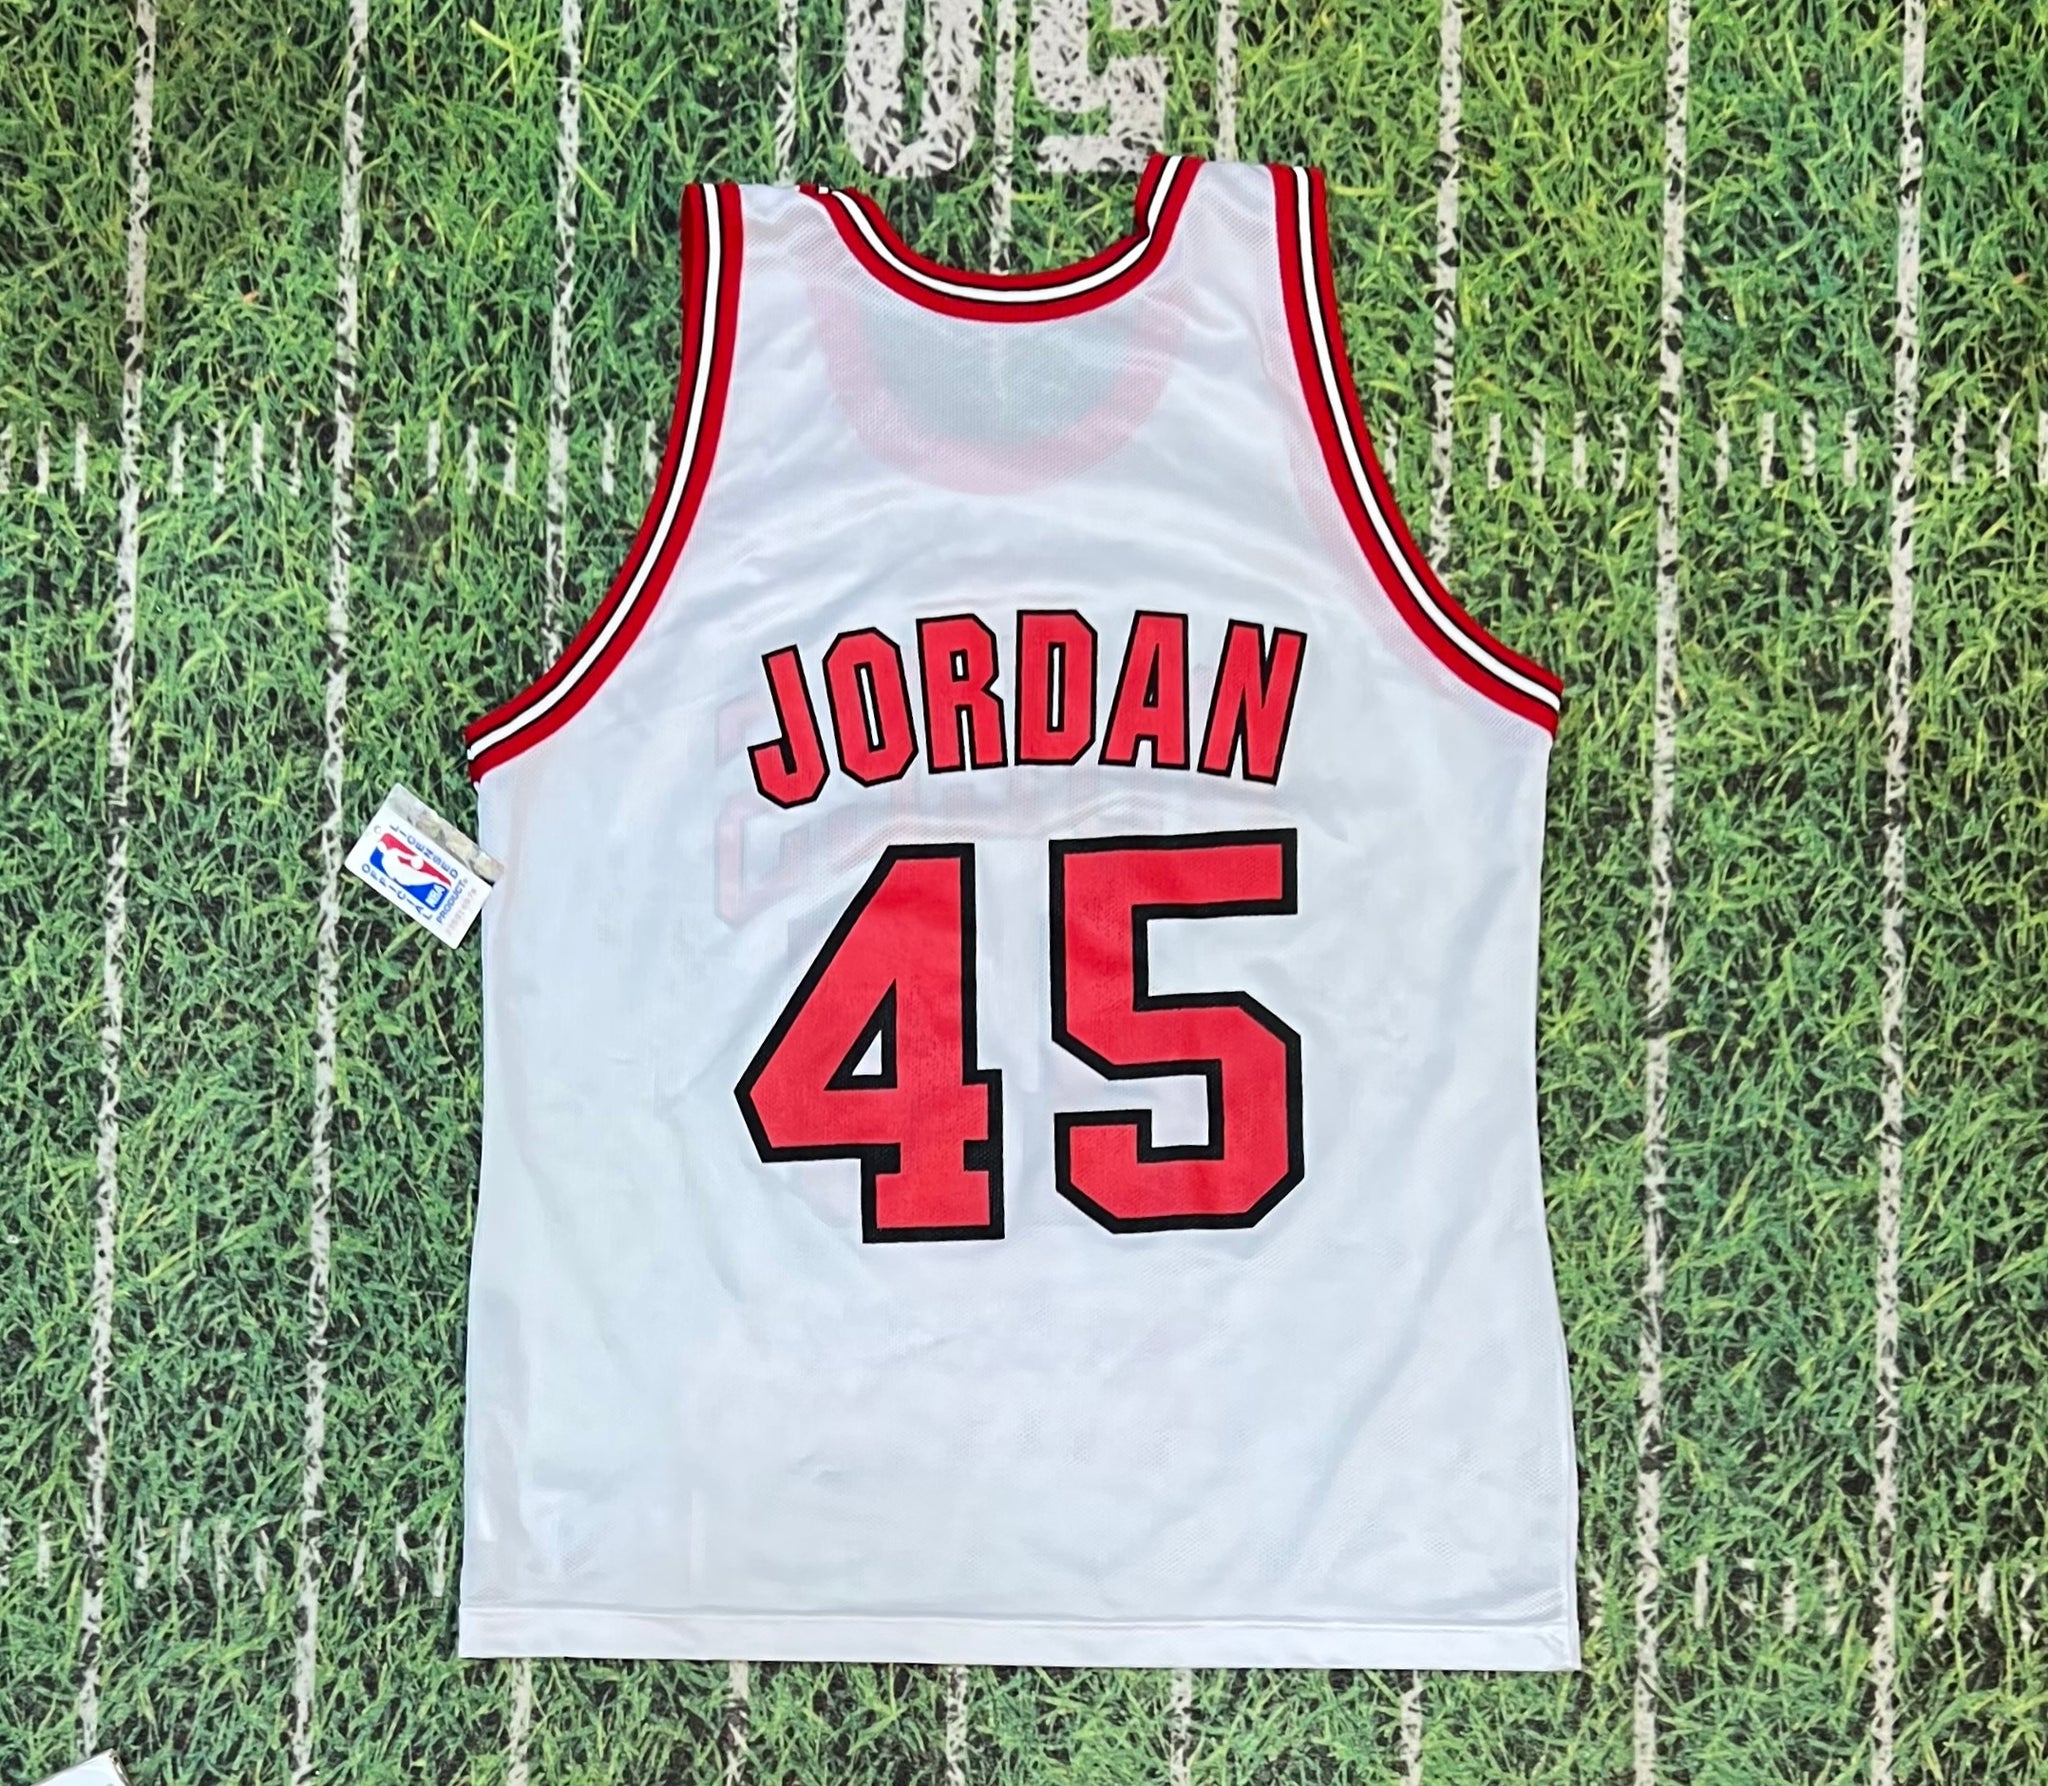 Vintage 90s Champion Chicago Bulls Michael Jordan #45 Home Jersey Size 44  Large